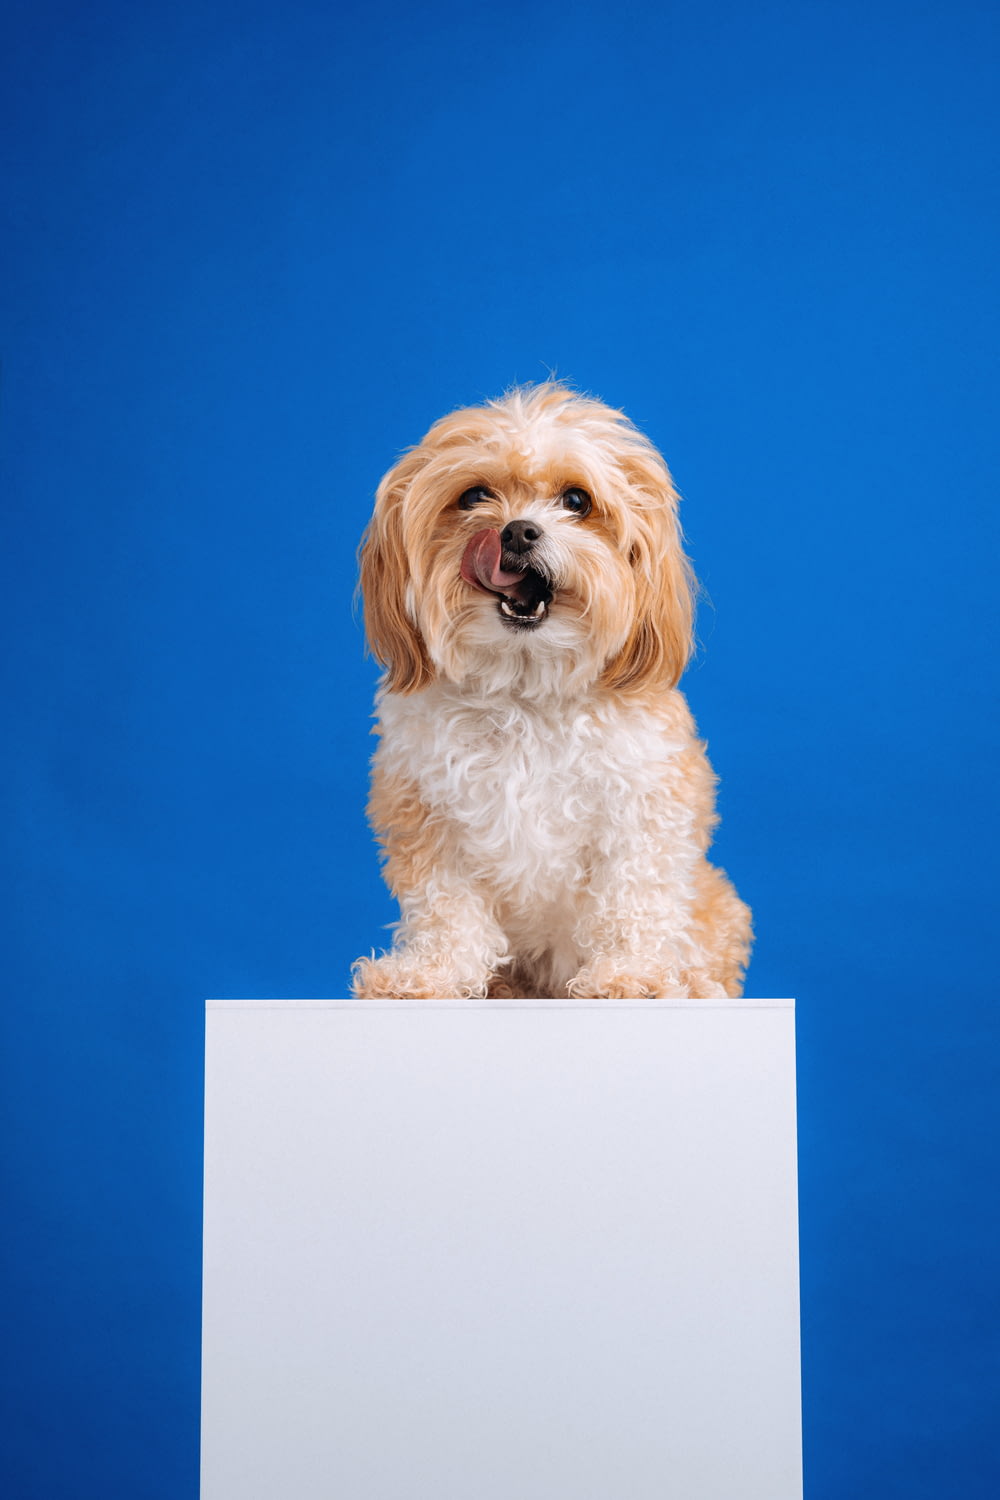 a dog sitting on a white box